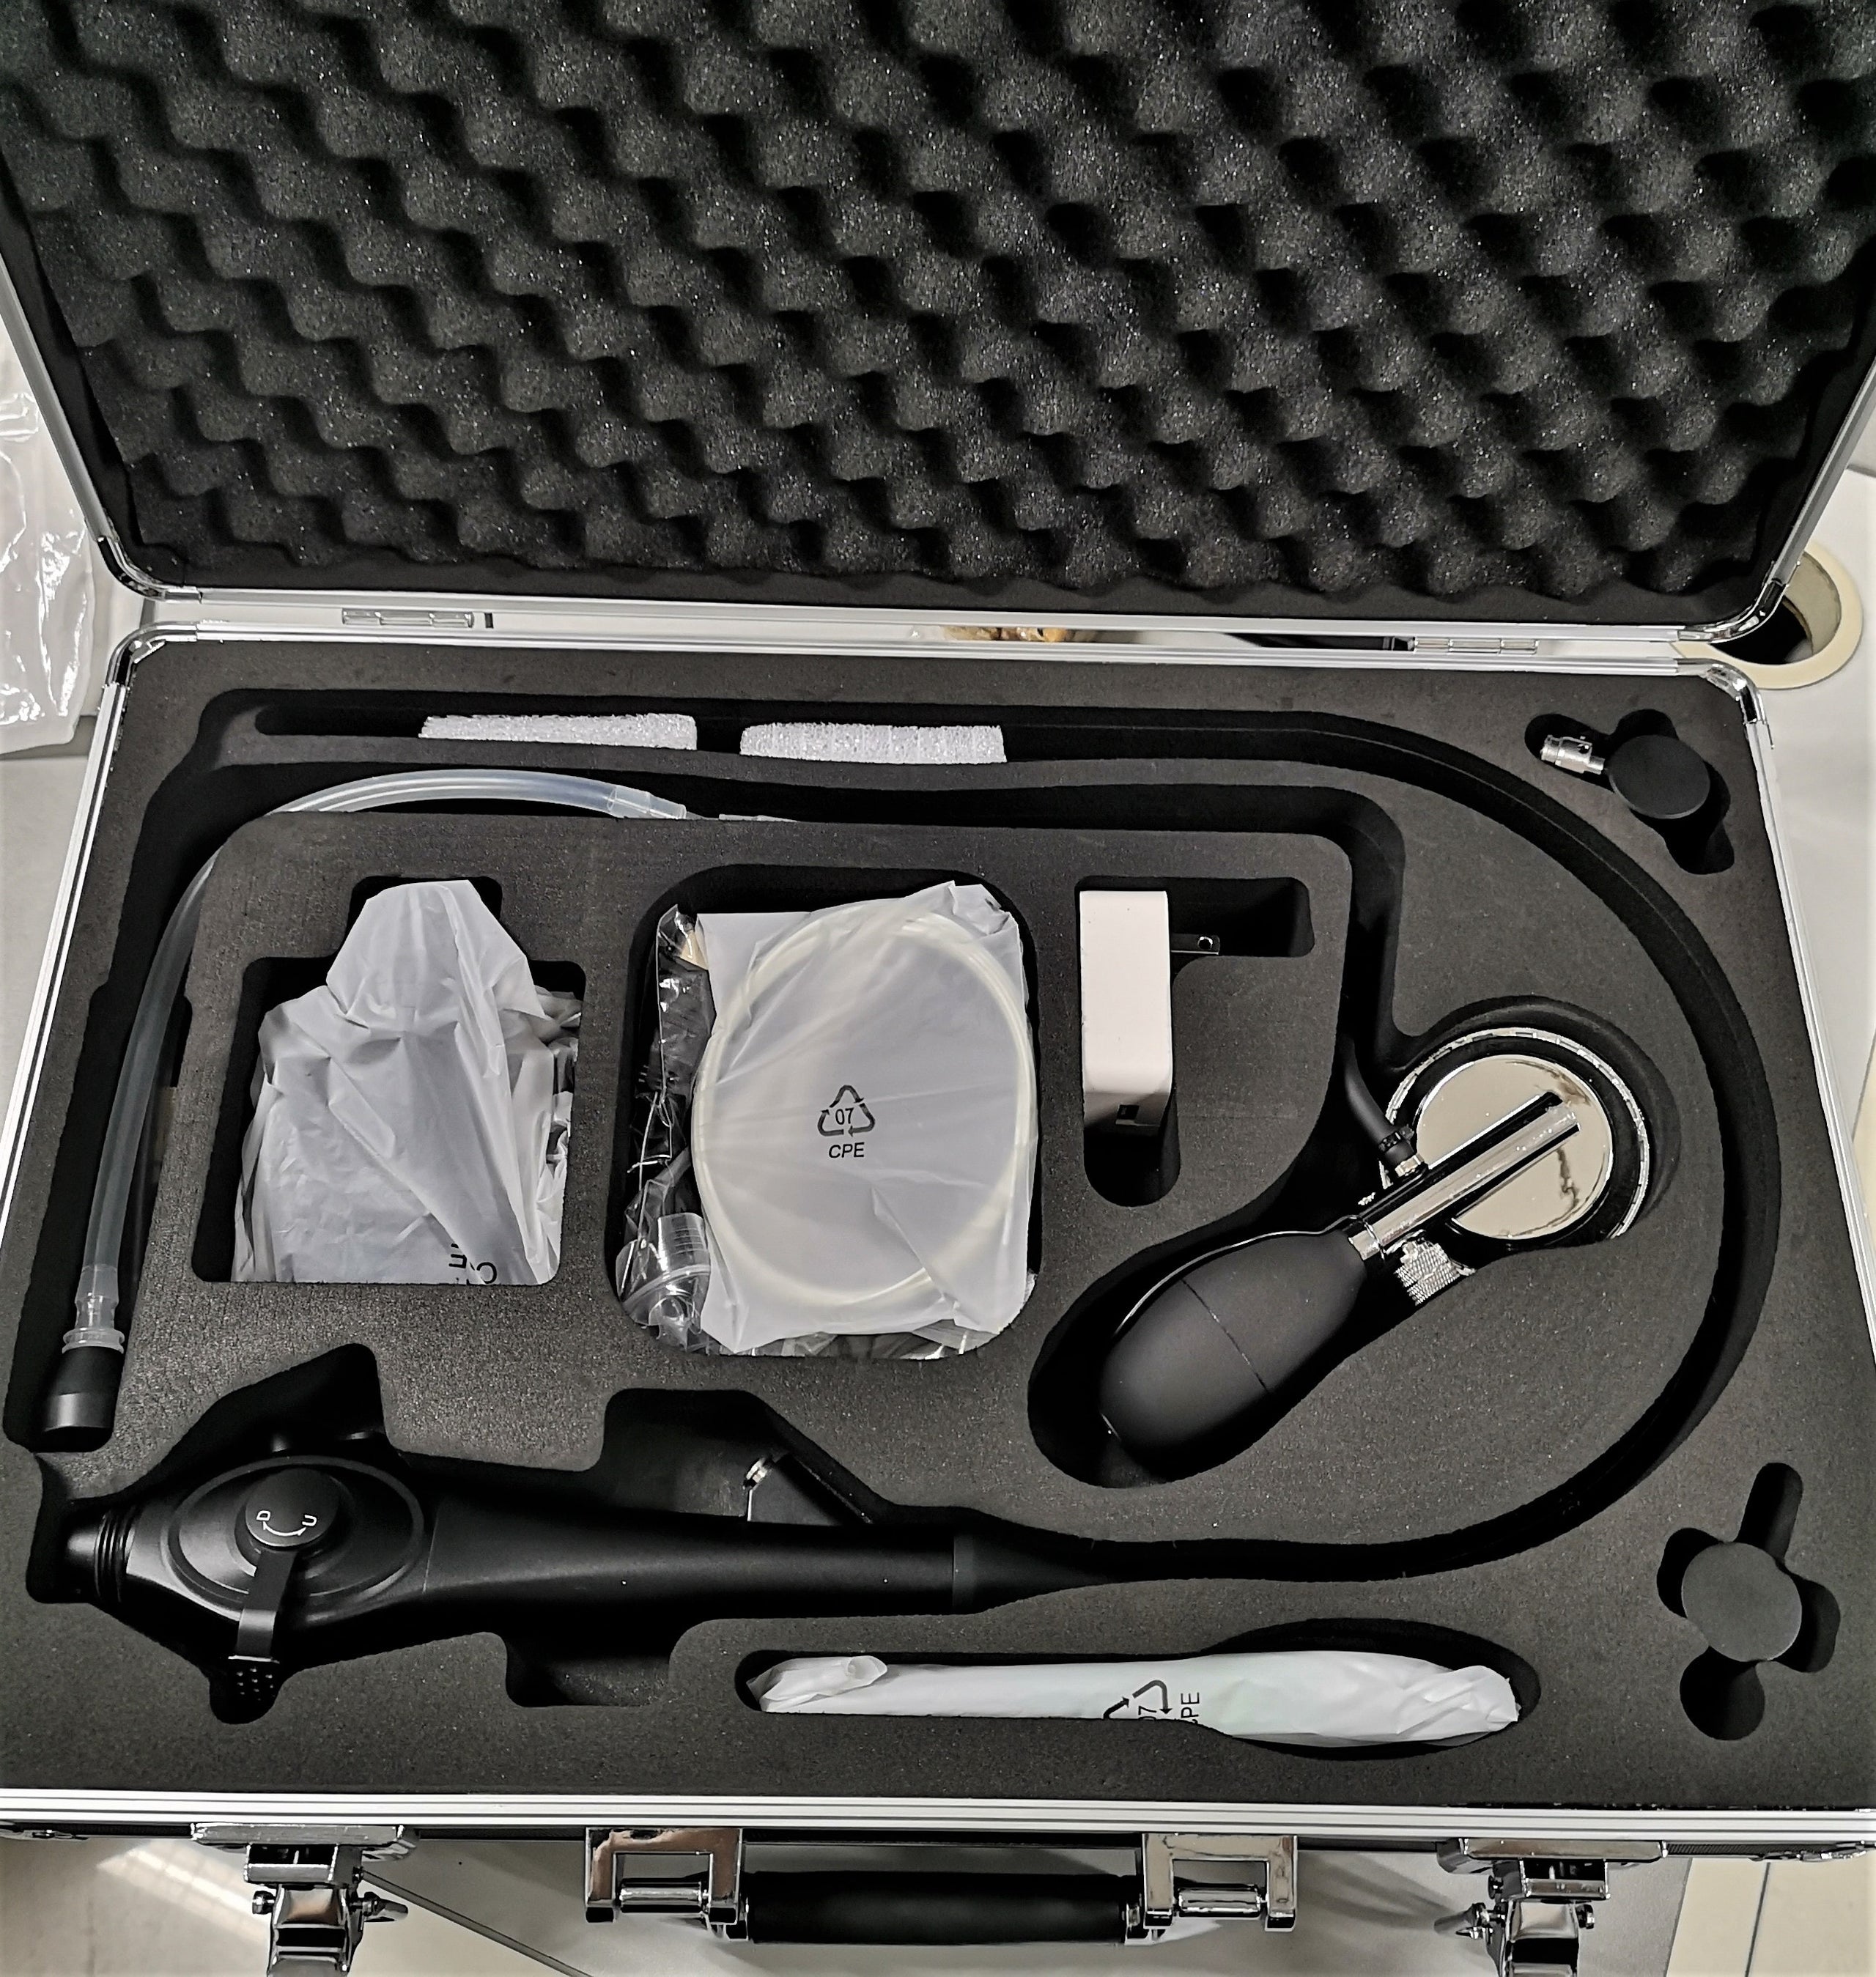 Veterinary endoscope Y-3860 with 3.8mm diameter probe camera video endoscope  with 1.2mm diameter working channel for veterinarians